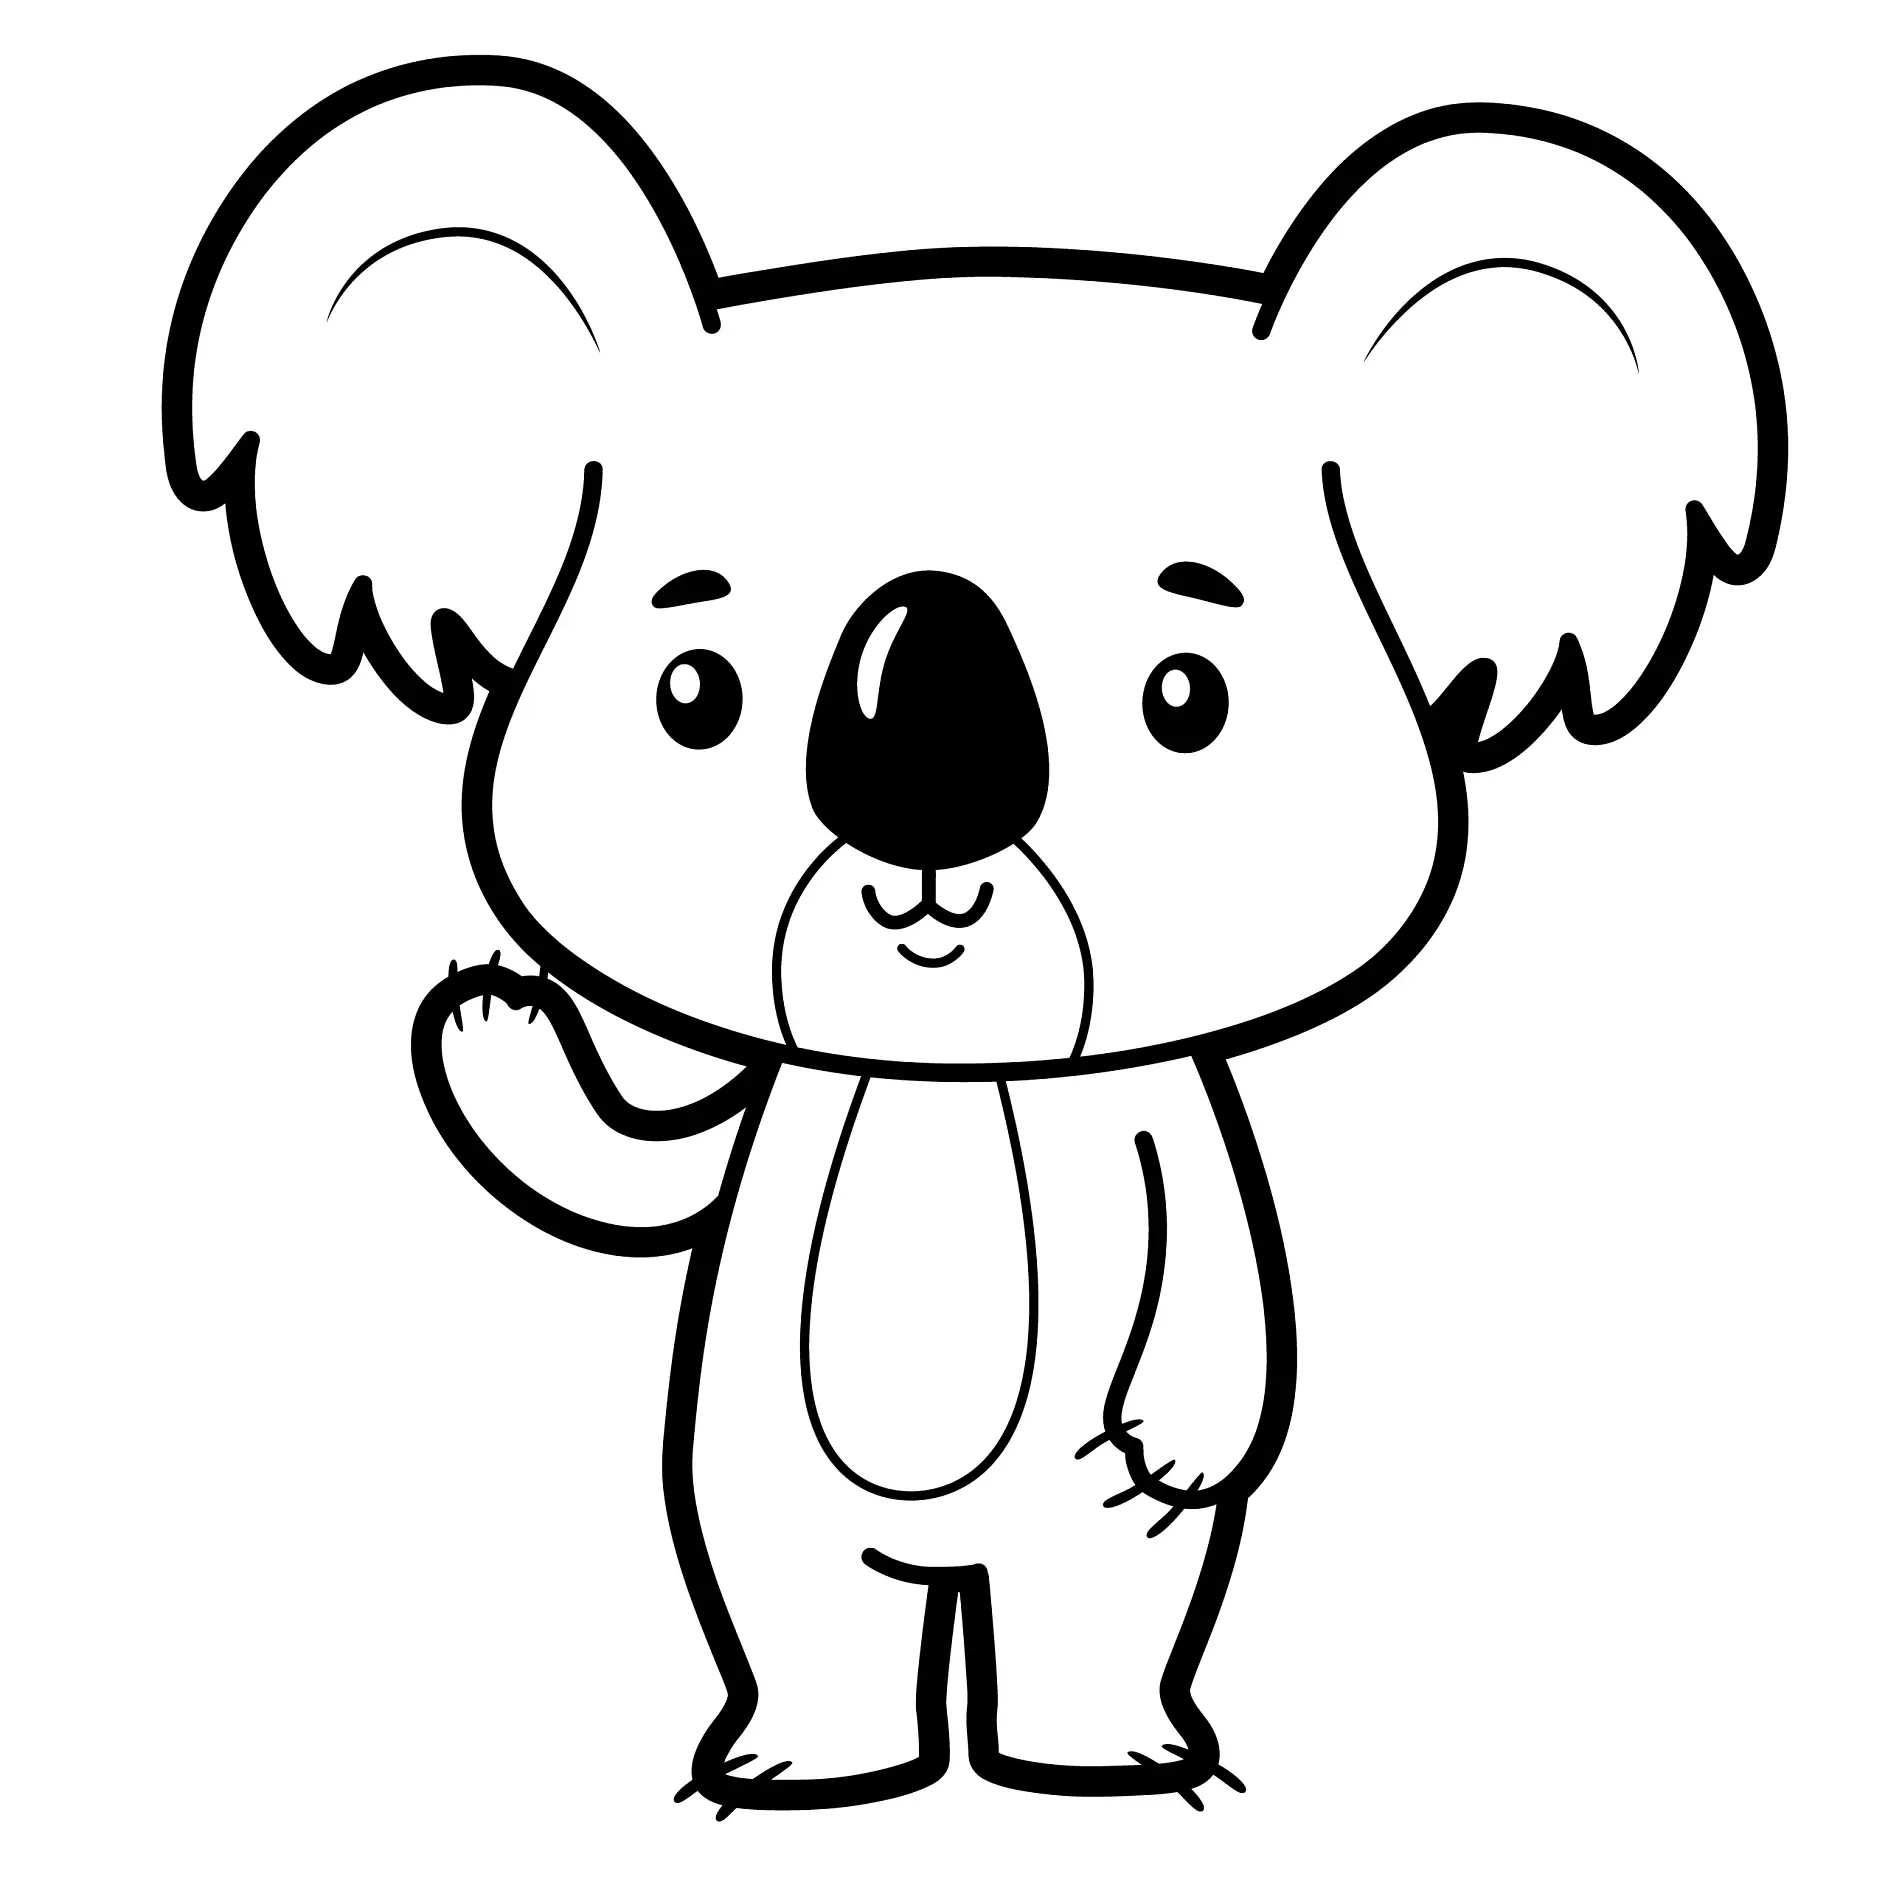 Ausmalbild Koala steht und winktColoring book or page for kids. koala black and white illustration